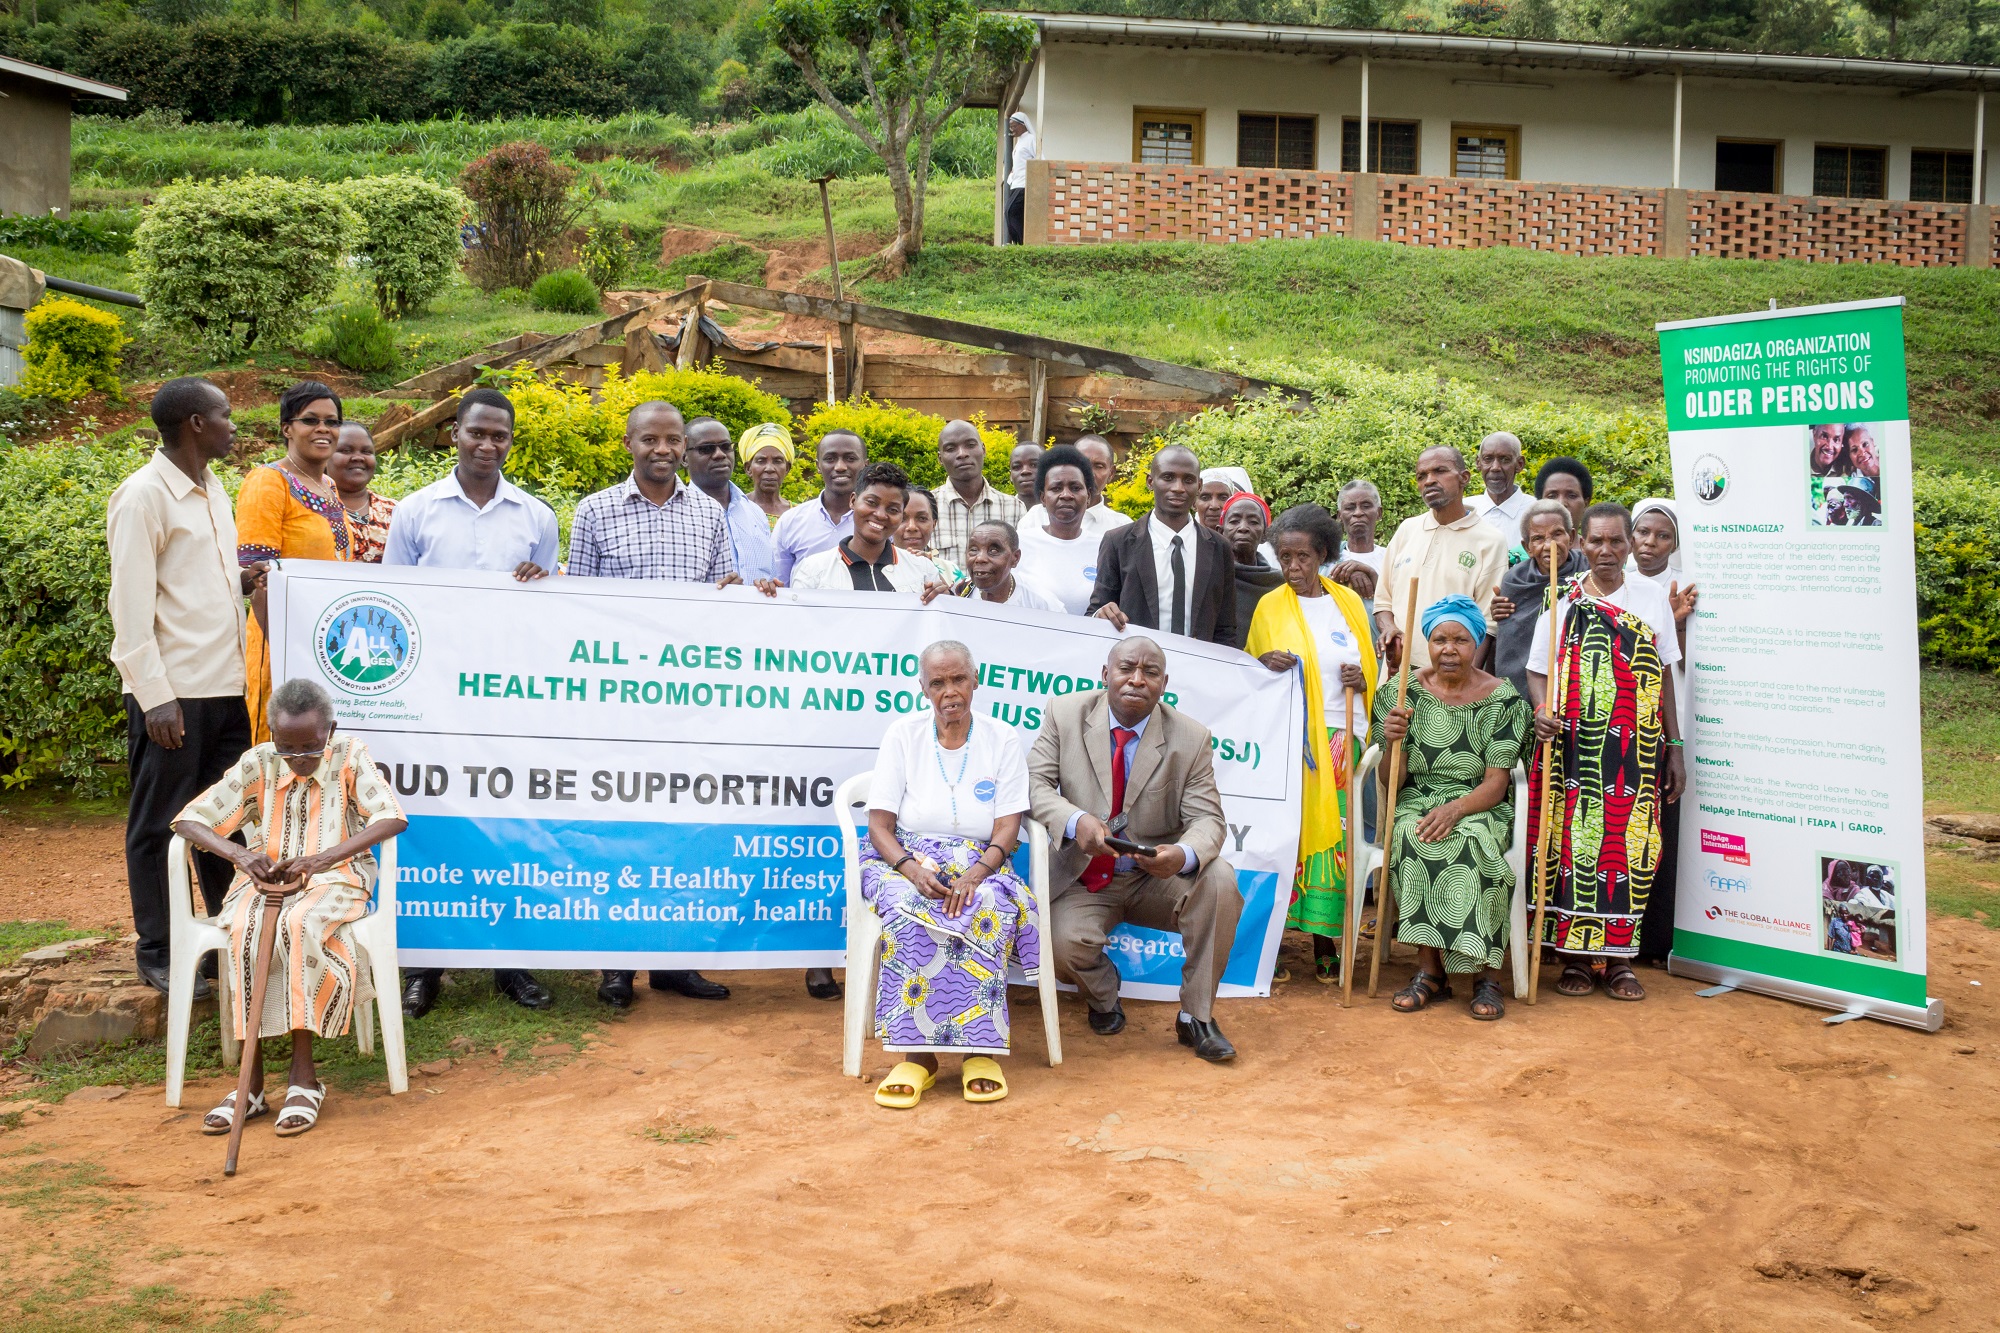  _524_https://www.helpage.org/silo/images/world-health-day-2017-in-rwanda-1_2000x1333.jpg